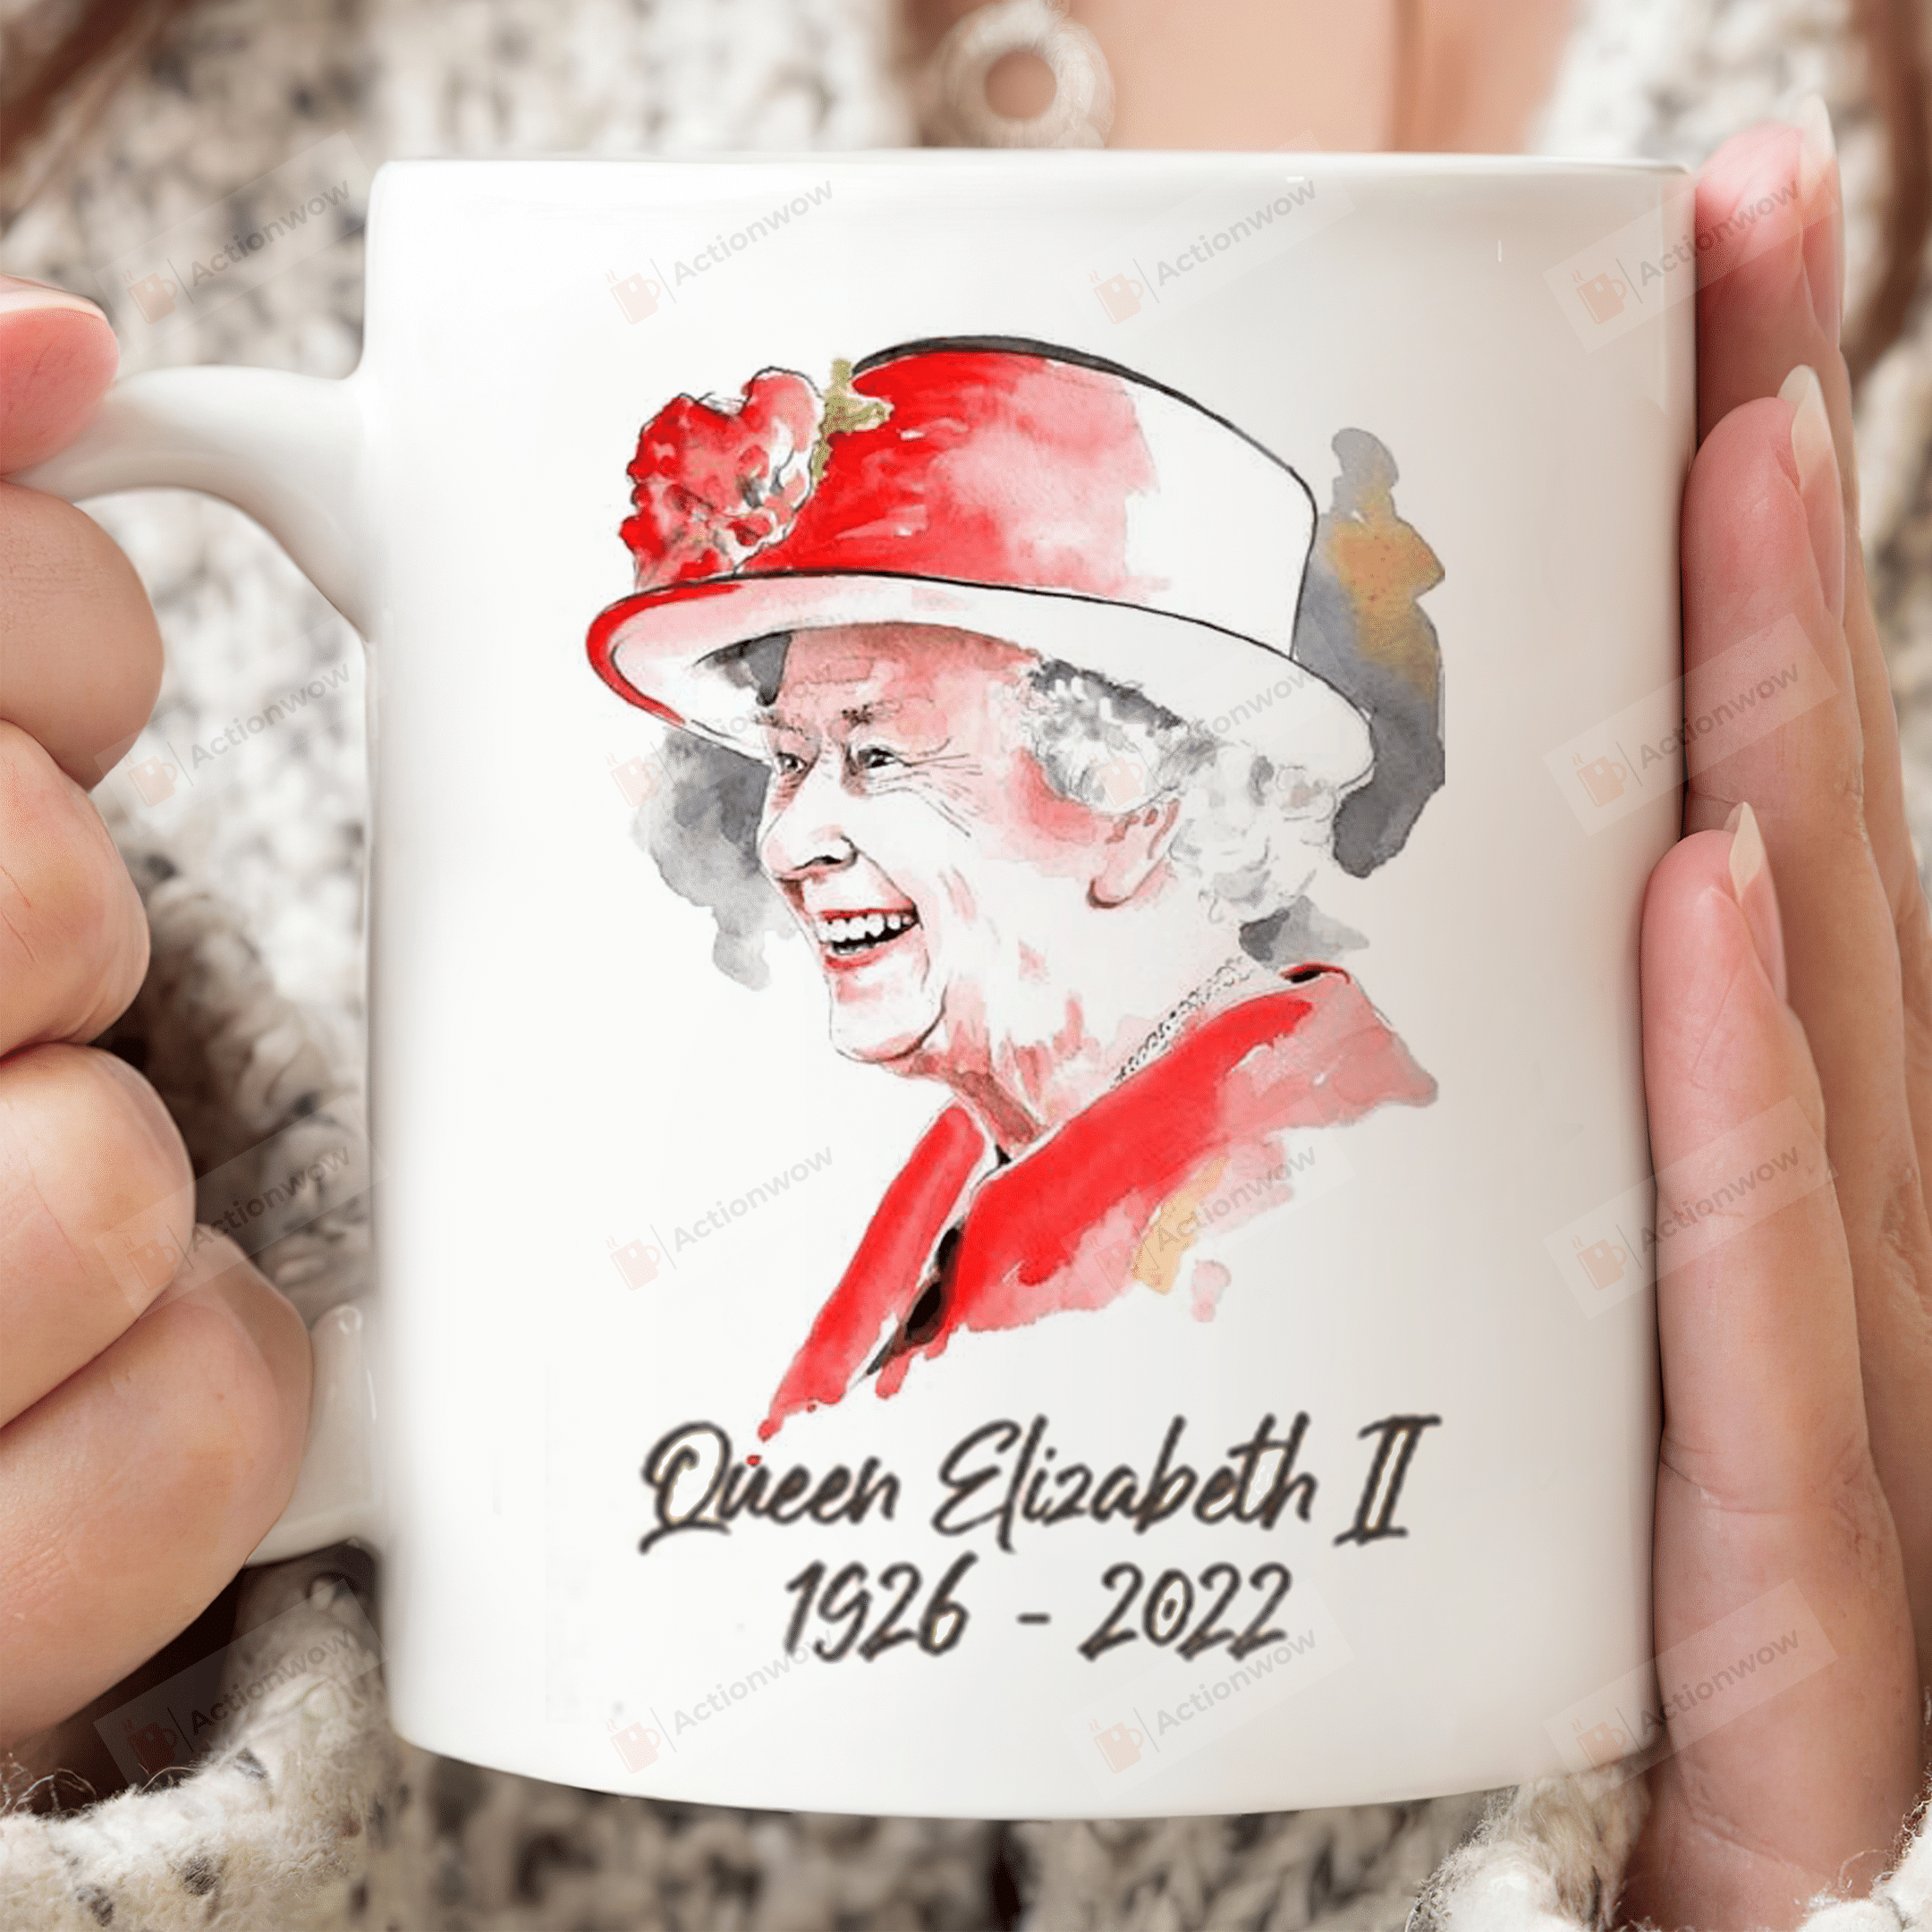 Queen Elizabeth Ii Rip 1926-2022 Mug, Rip Queen Elizabeth Ii Mug, Rest In Peace Queen Elizabeth Mug, Queen Elizabeth Ii Coffee Mug Tea Cup